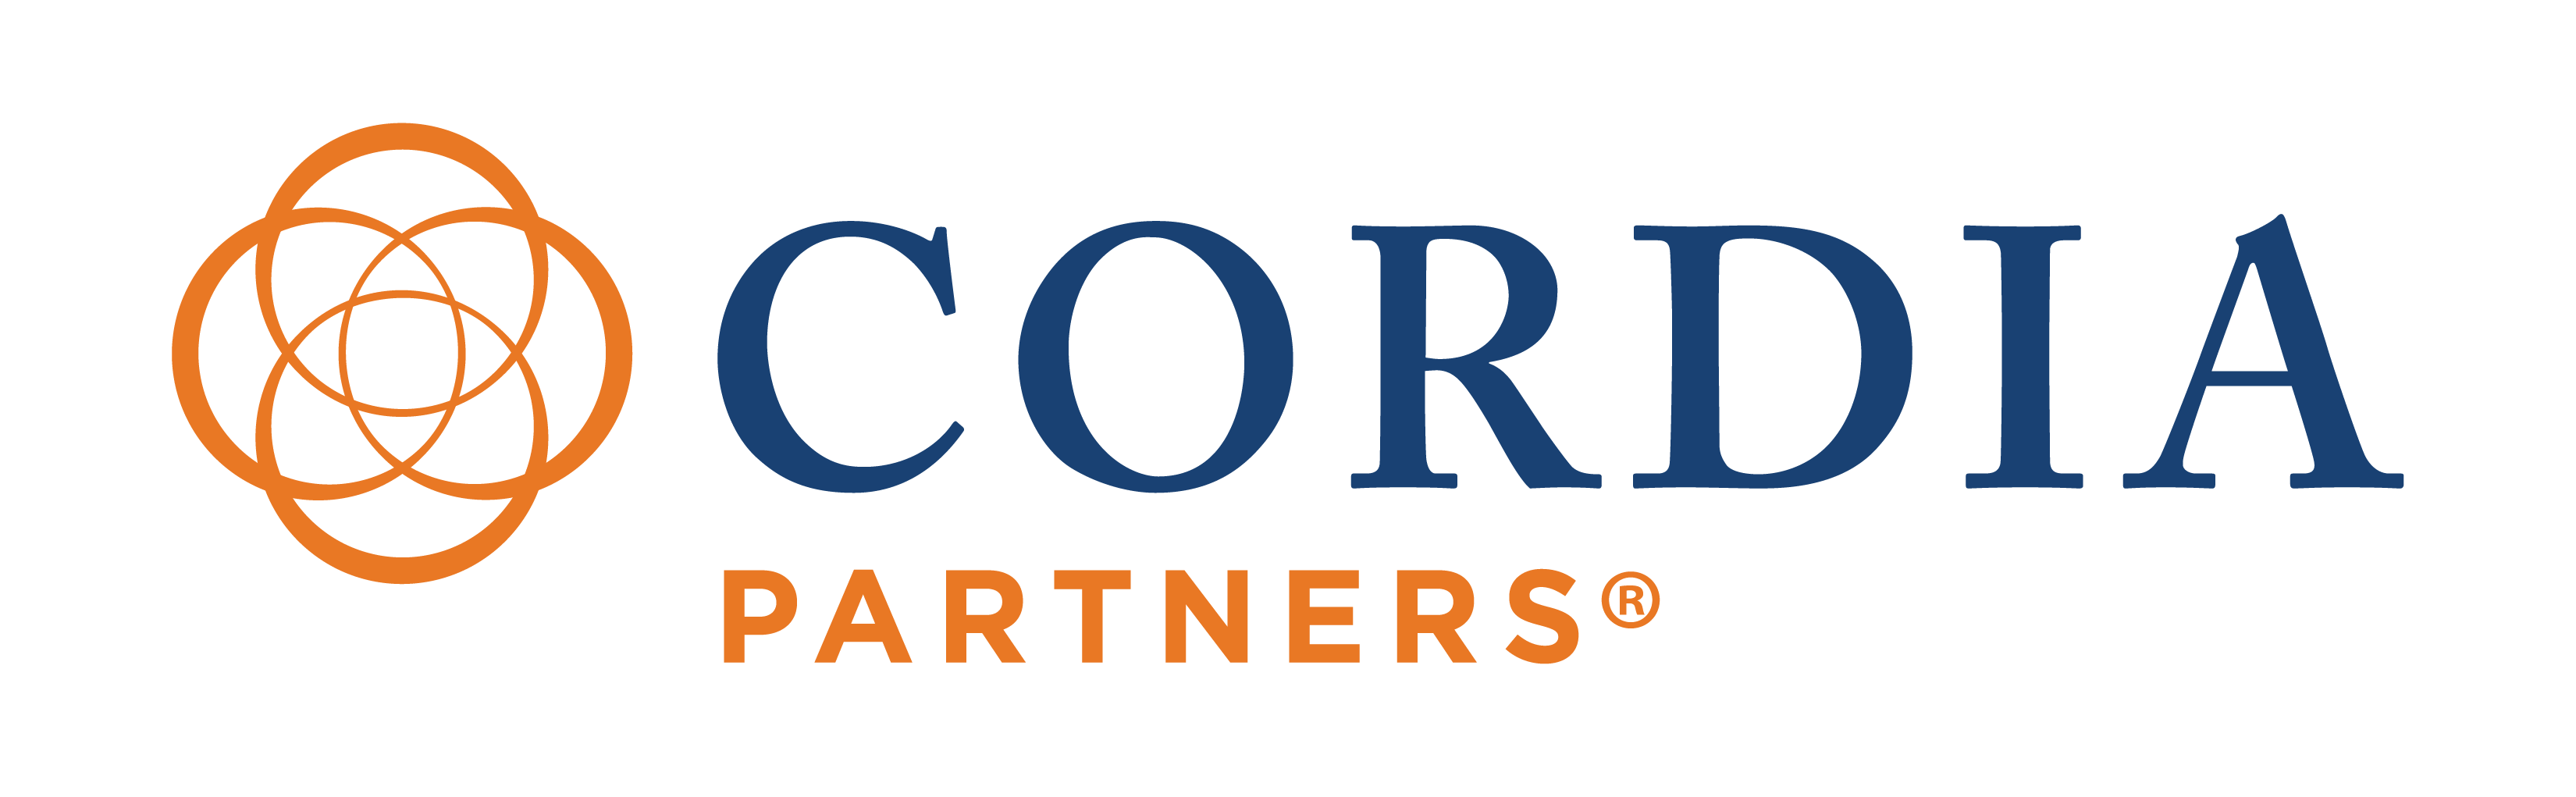 Cordia Partners logo